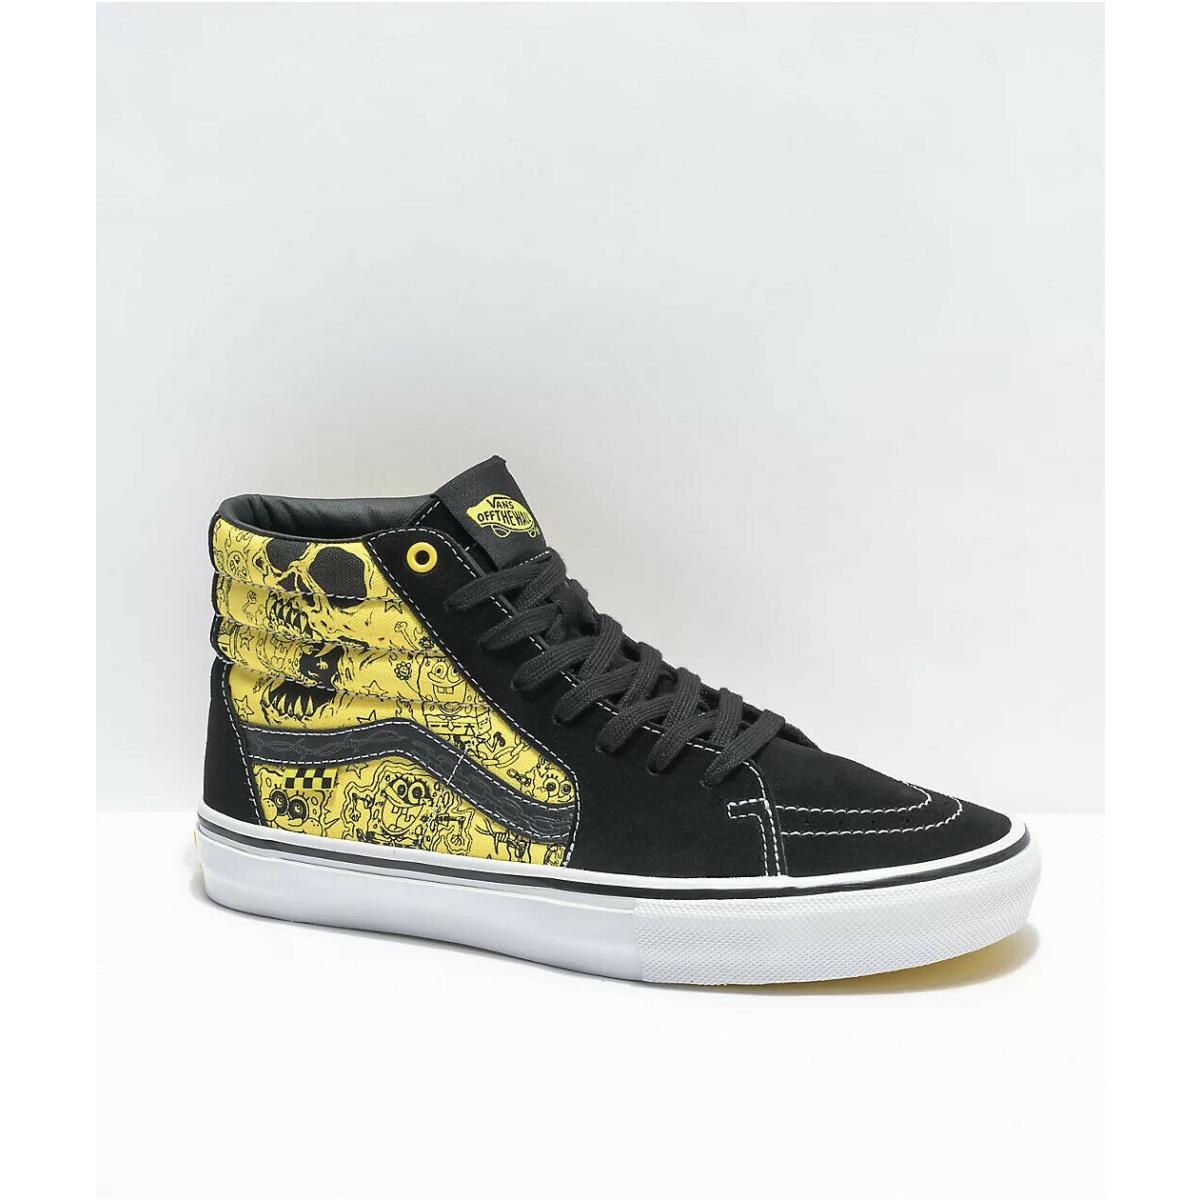 Vans Skate Sk8 Hi Spongebob Squarepants Shoes Black / Yellow Men`s Size 8.5